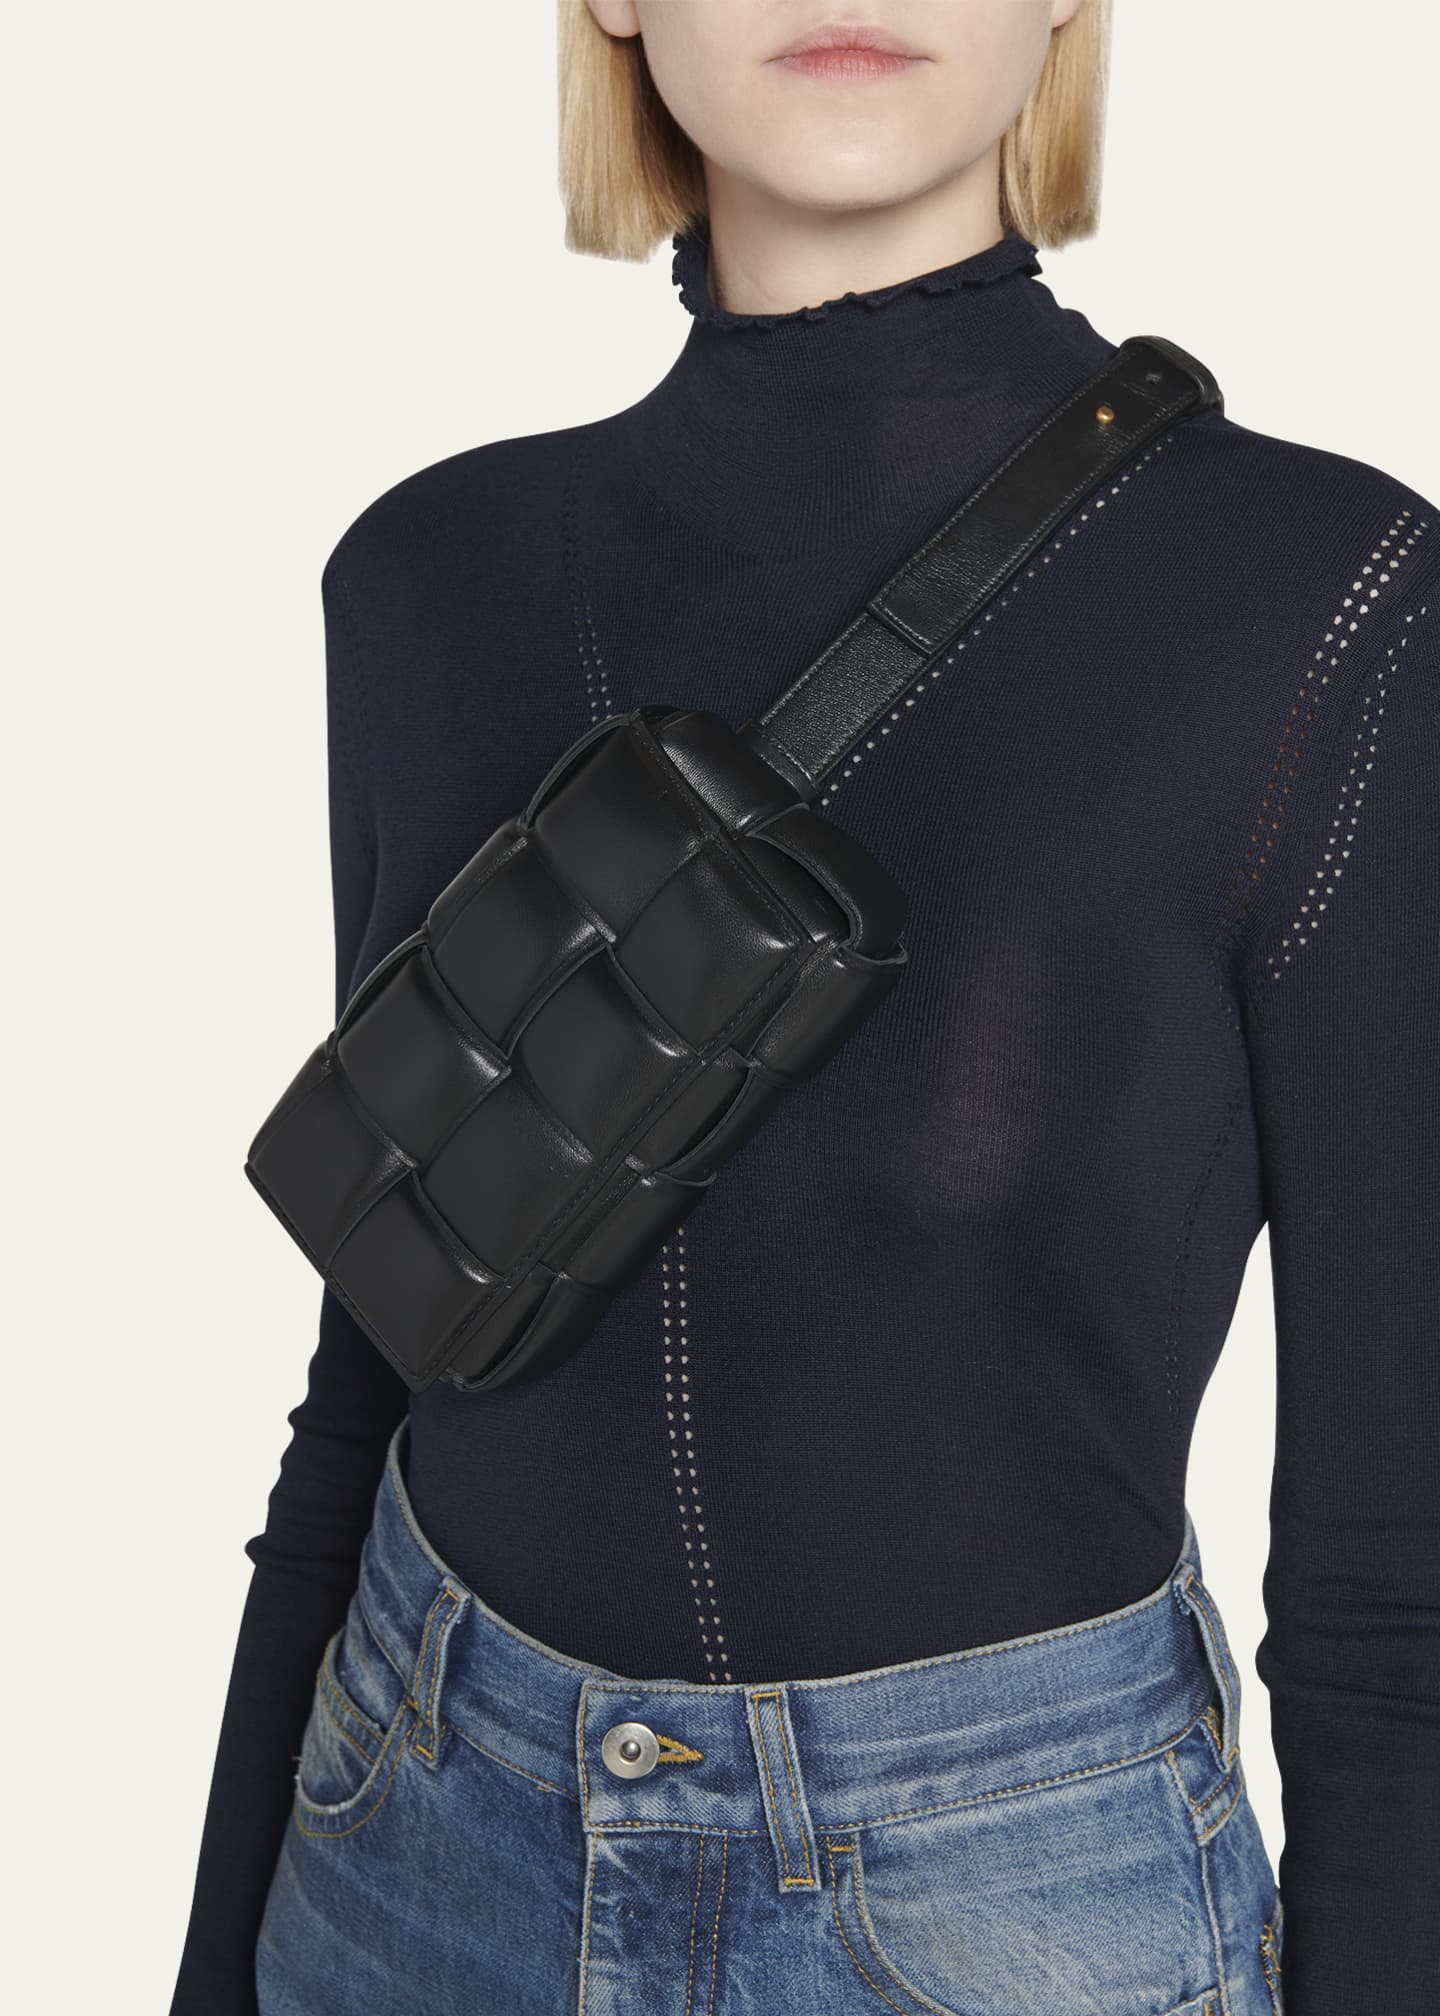 Bottega Veneta Cassette Intrecciato Leather Shoulder Bag in